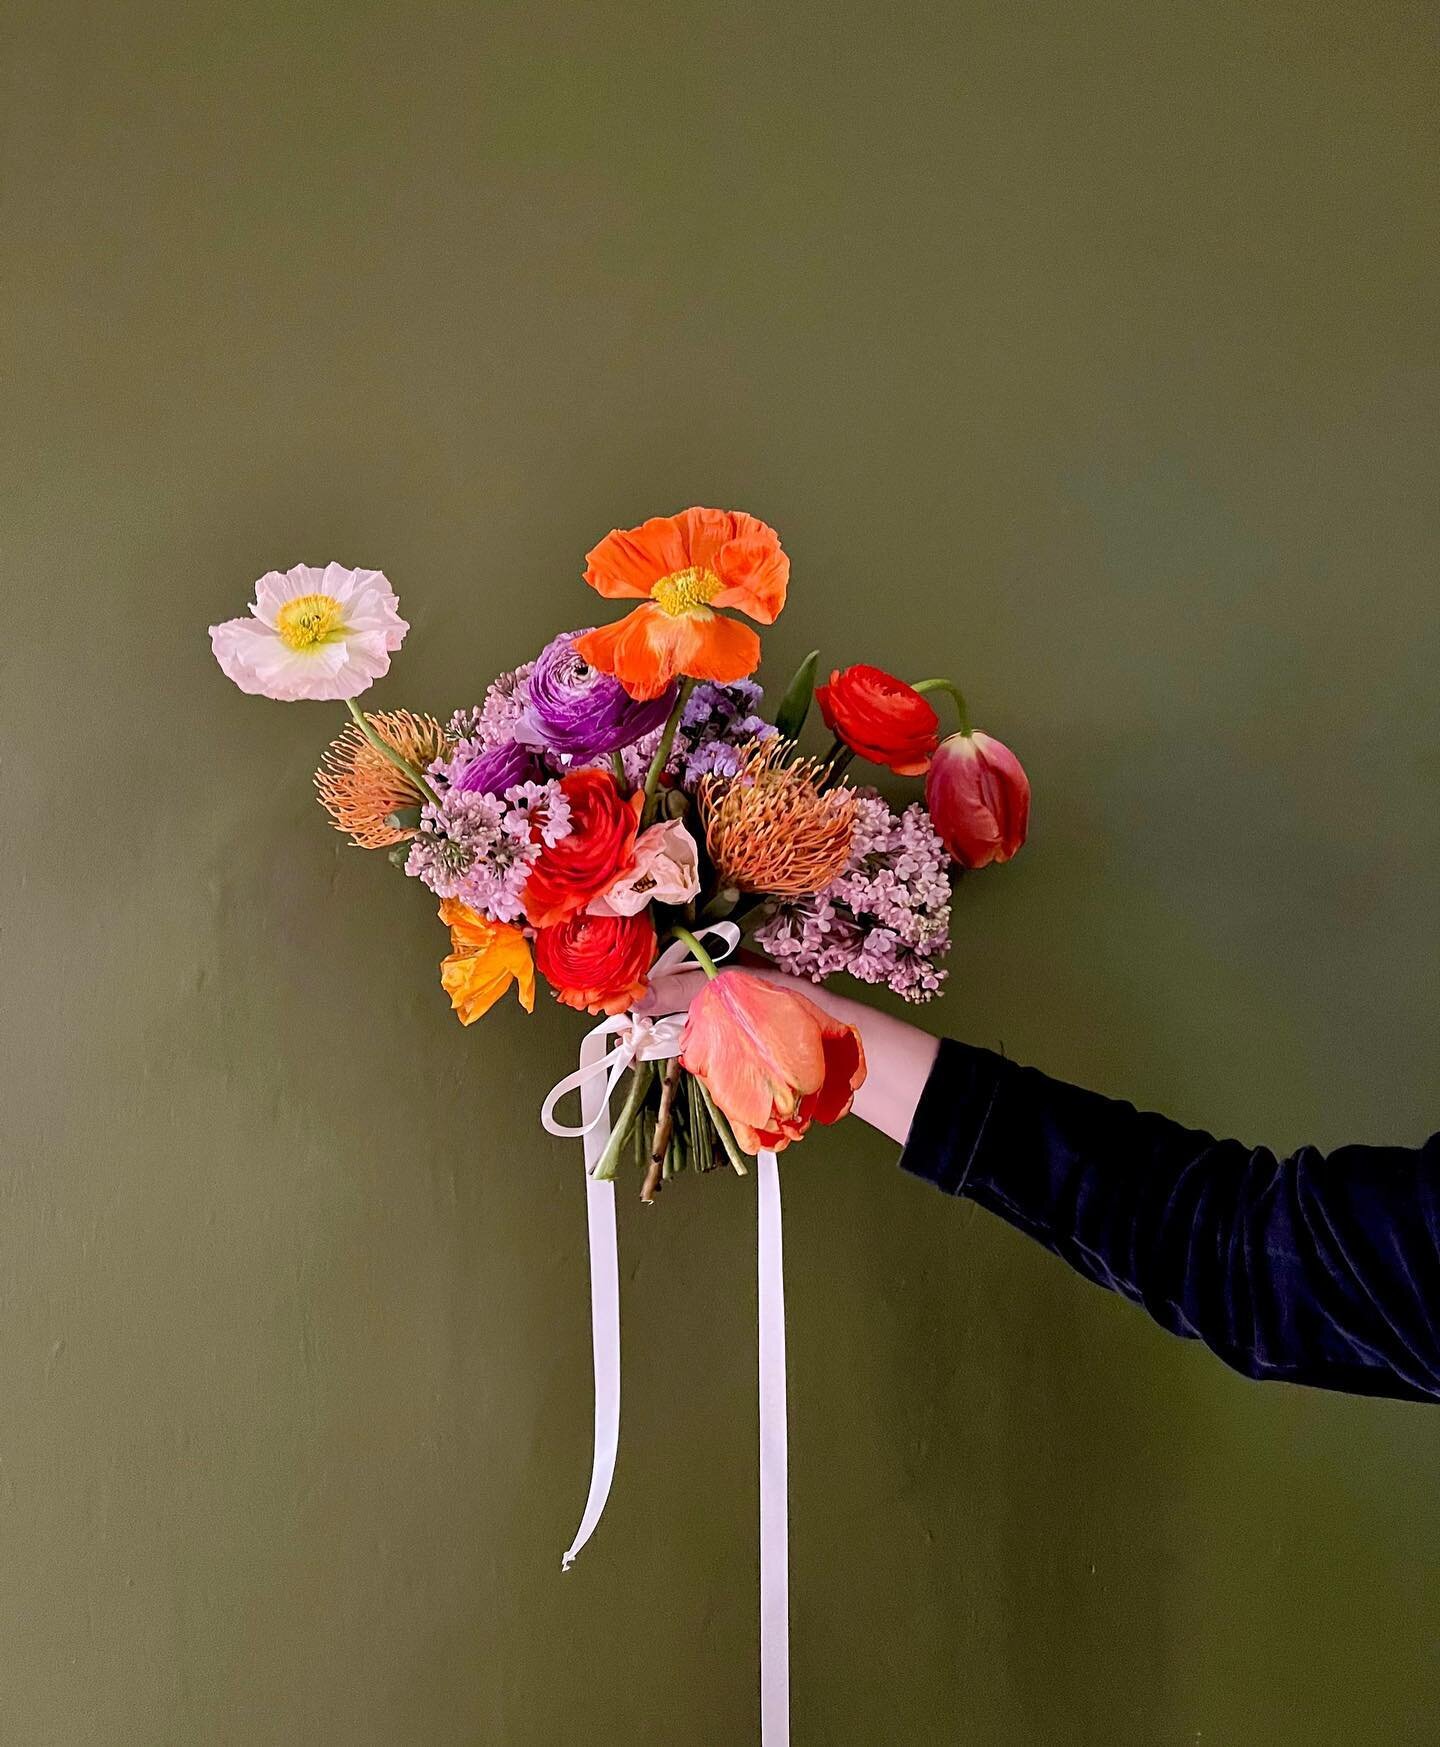 Joyful bridal bouquet for @pipjolley 🧡
⠀⠀⠀⠀⠀⠀⠀⠀⠀
 #ultramarineflowers #ultramarinemargate #weddingflowers #weddingbouquet